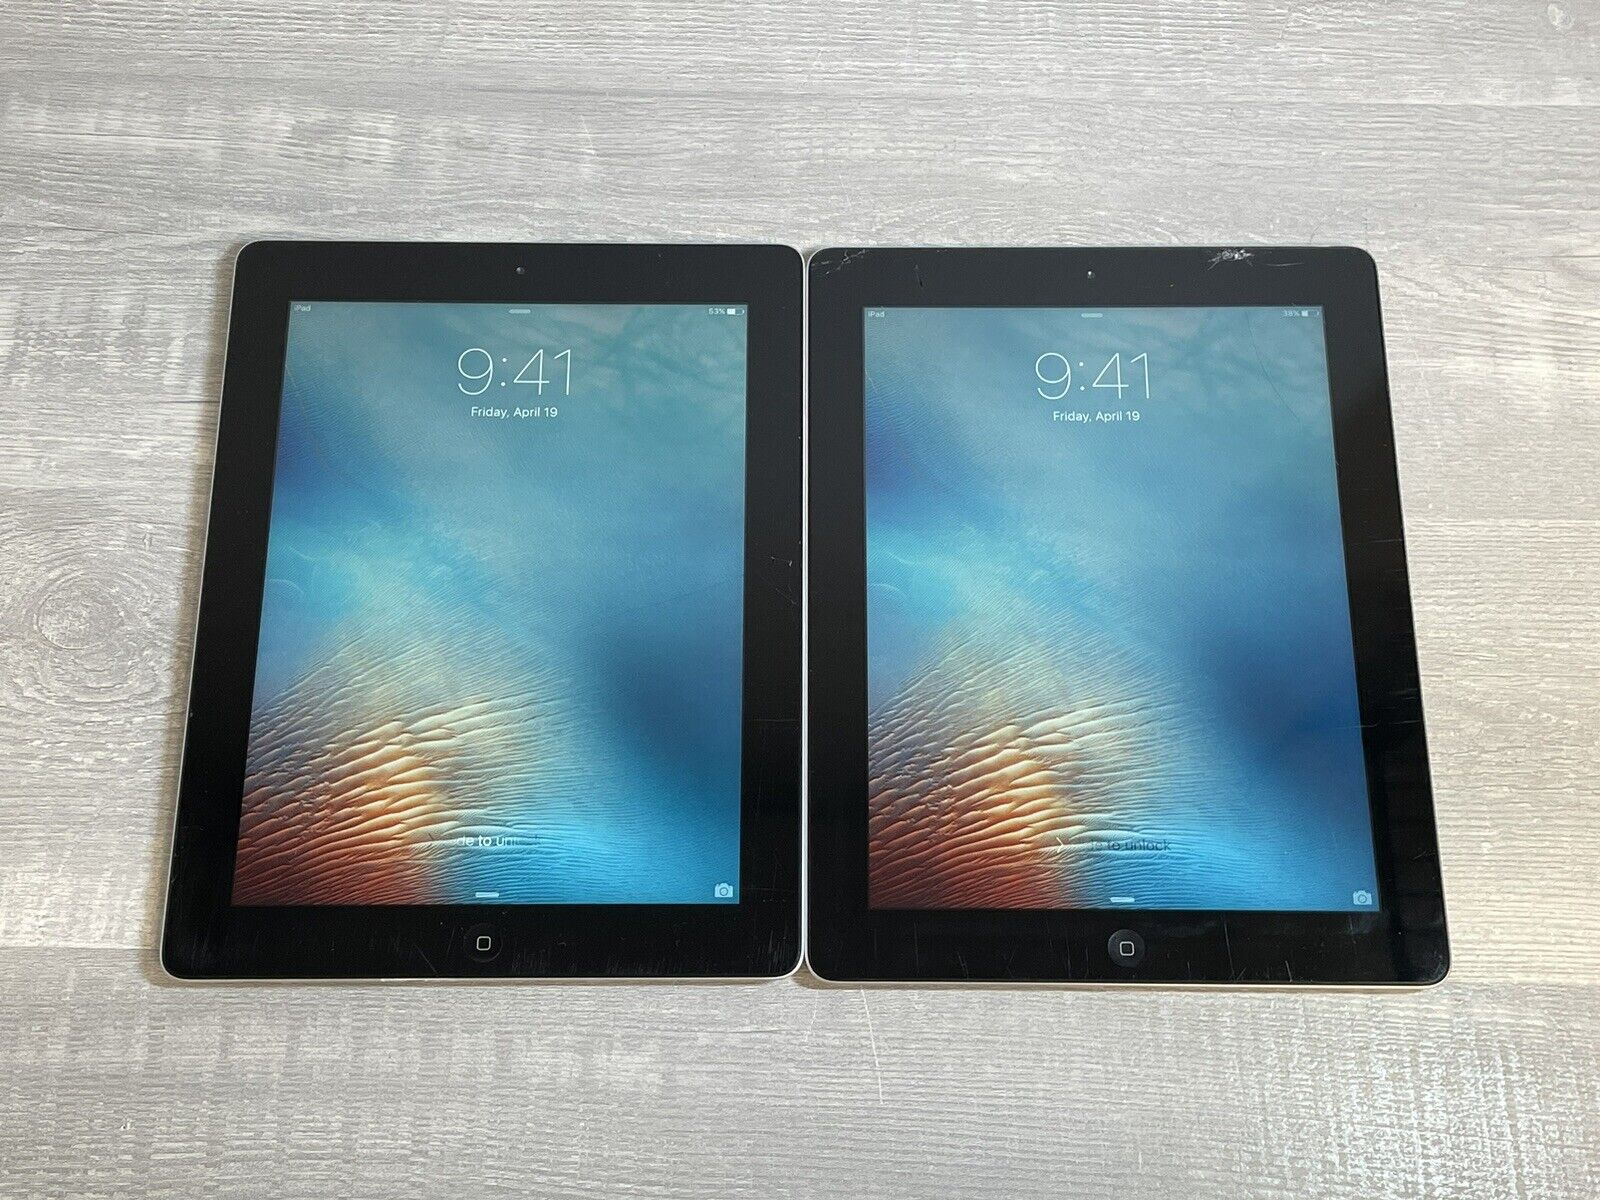 2x Lot Apple iPad 3rd Gen. 64GB, Wi-Fi, 9.7in - Black Read Description